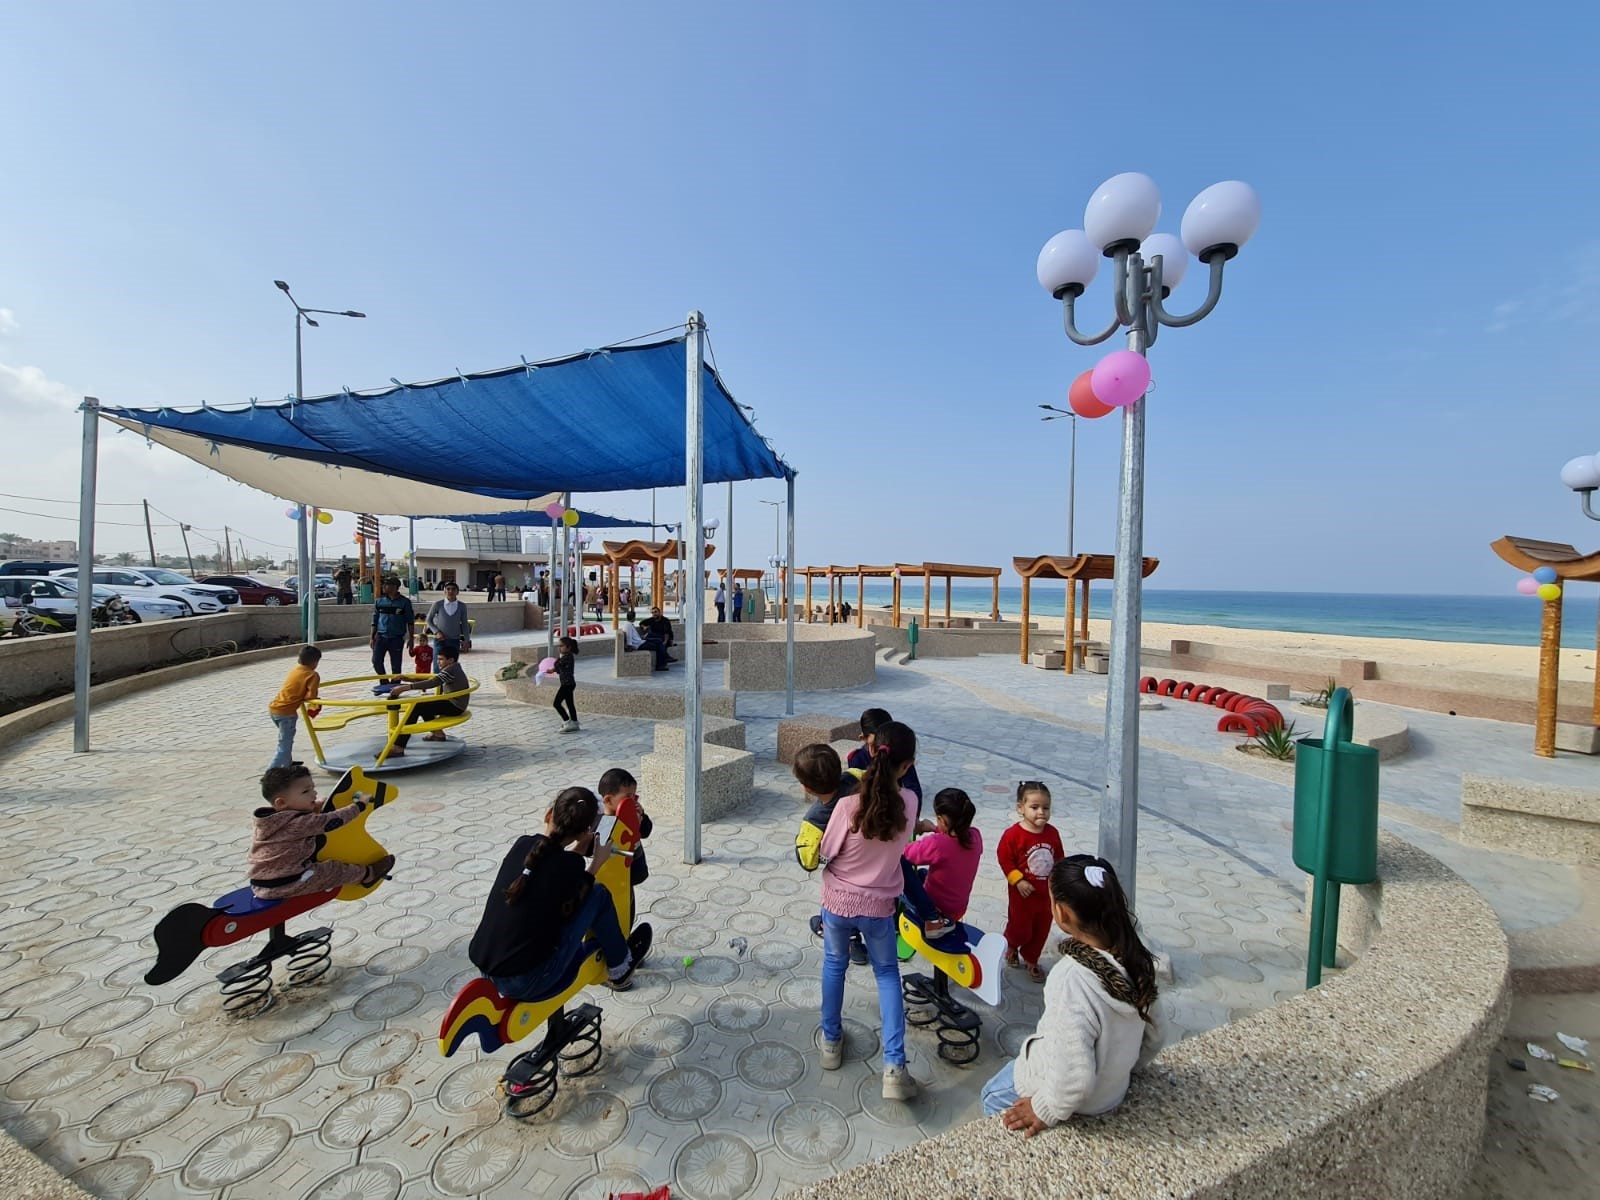 UN-Habitat helps launch exclusive Gaza promenade for women, girls, and families